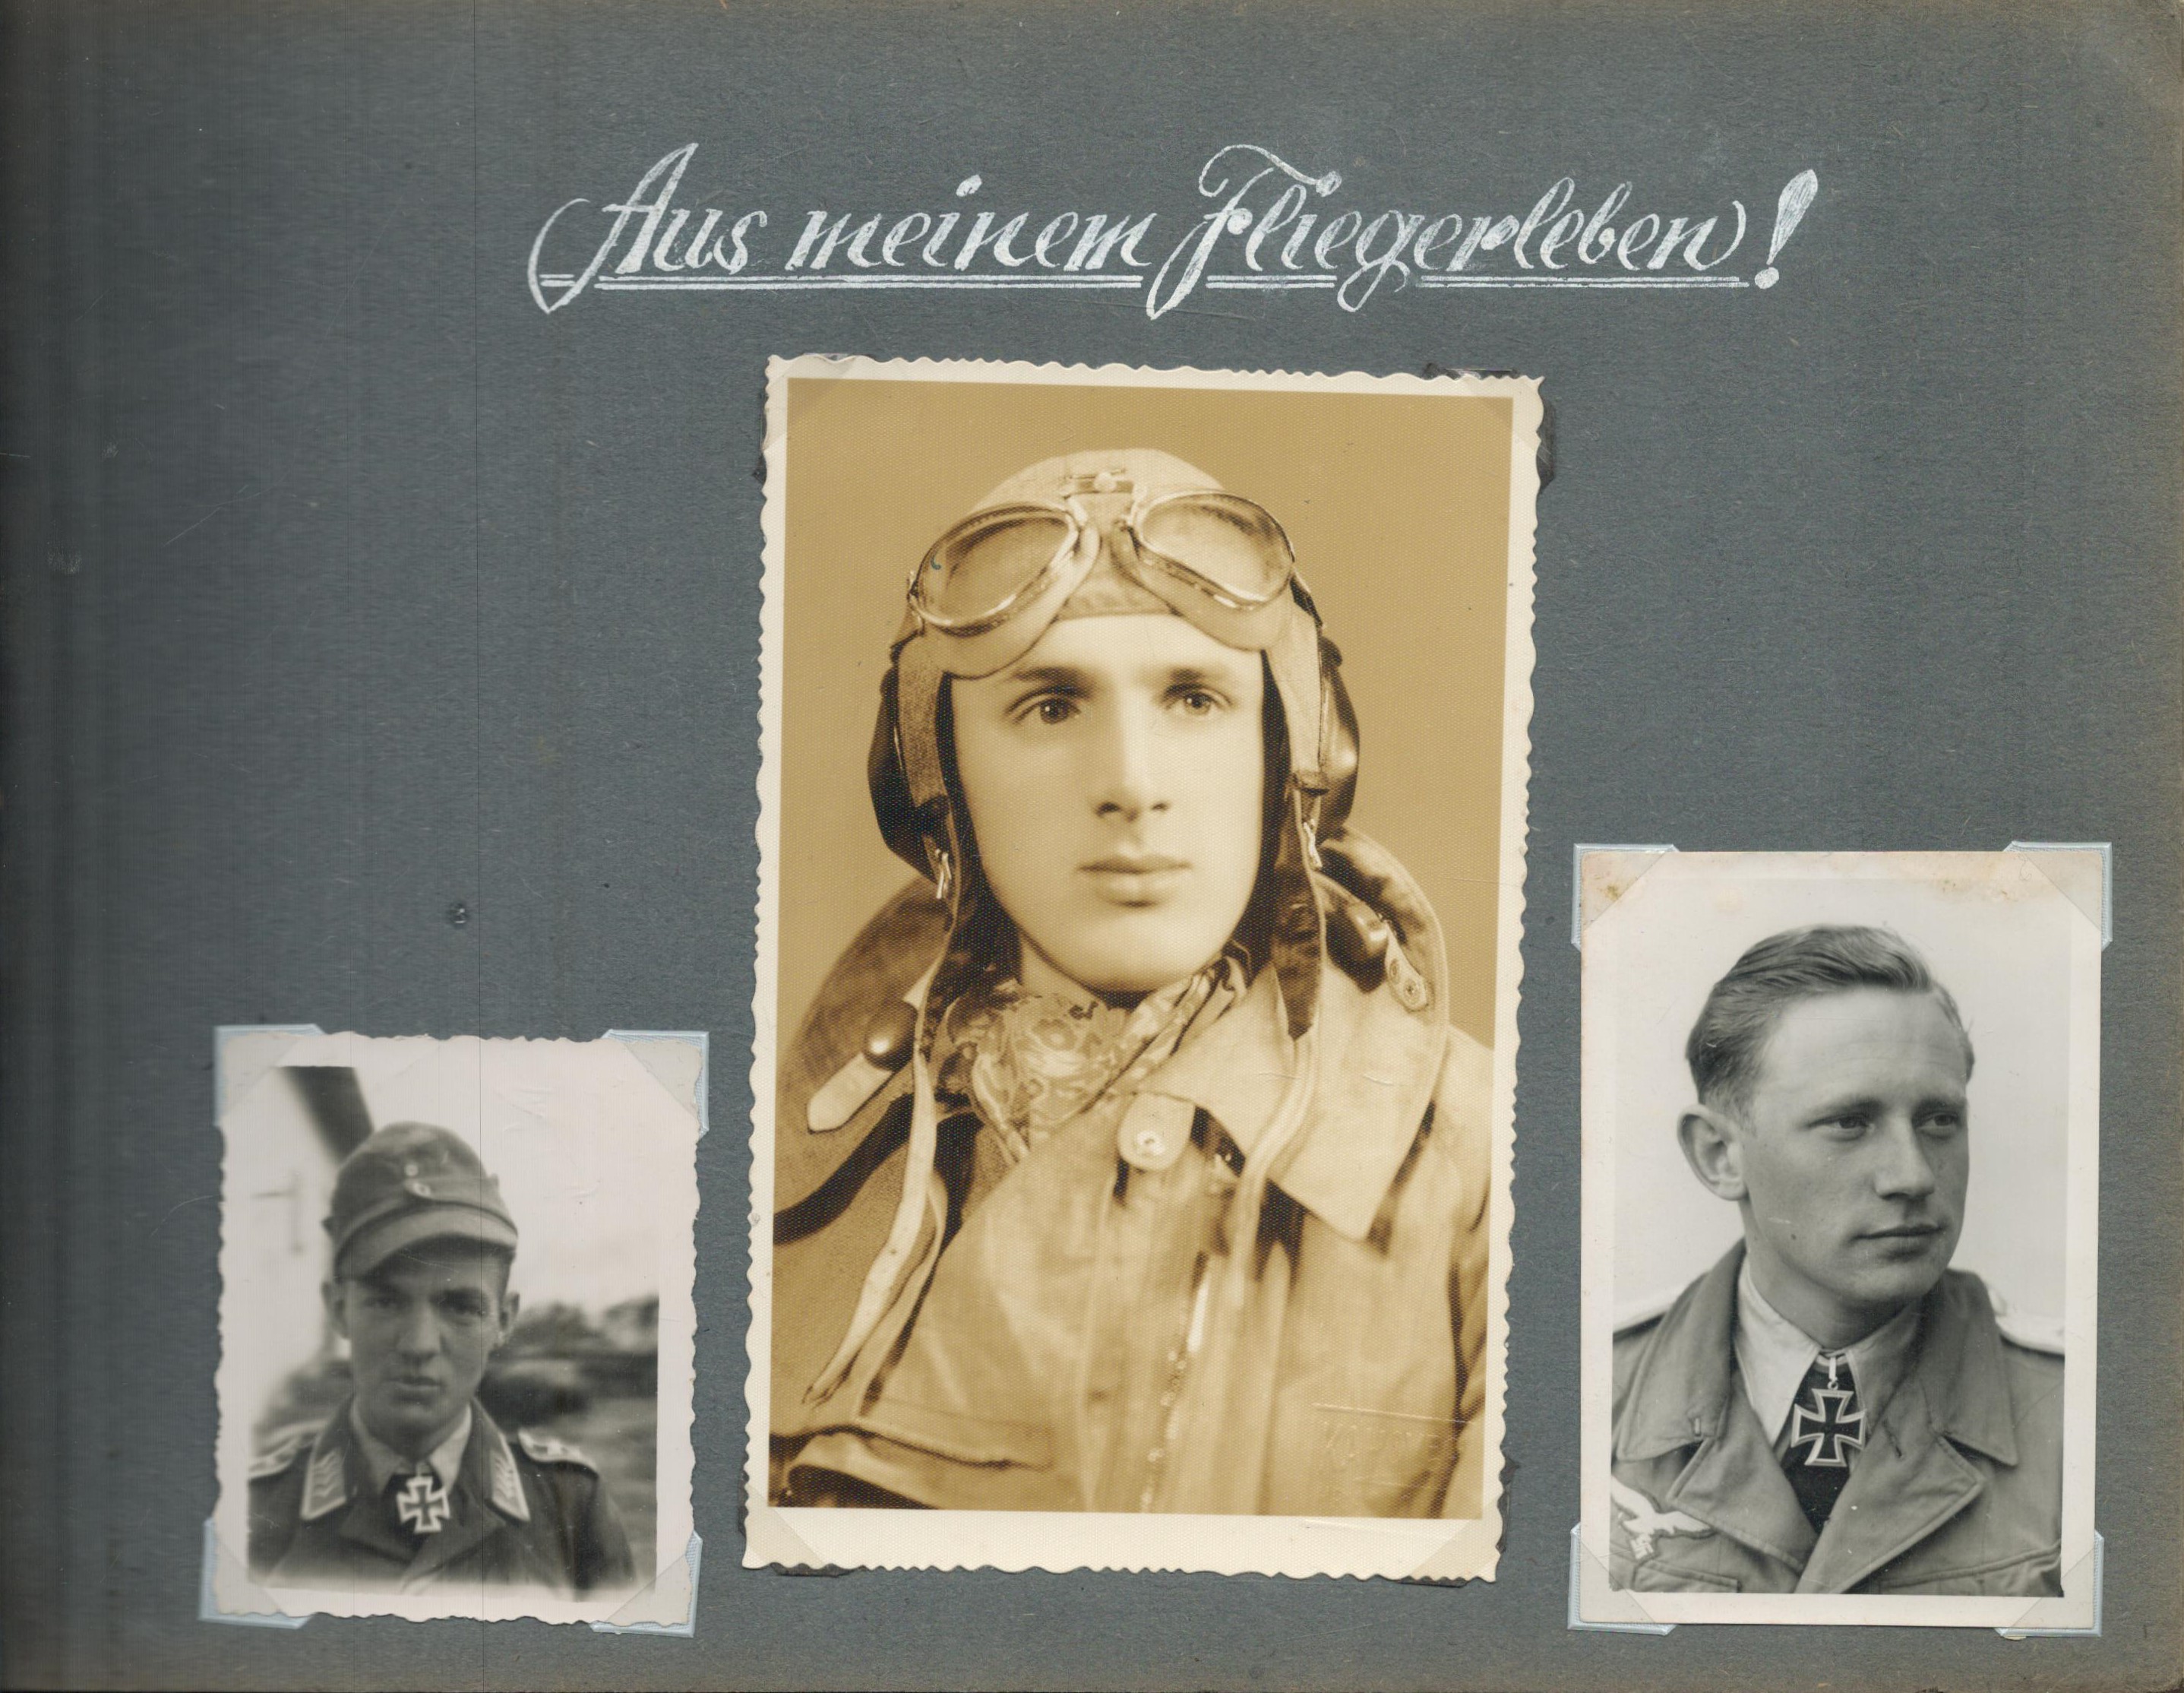 Luftwaffe Stuka Operator photo album of the career and war memories of Erich Heine rear gunner and - Image 2 of 12